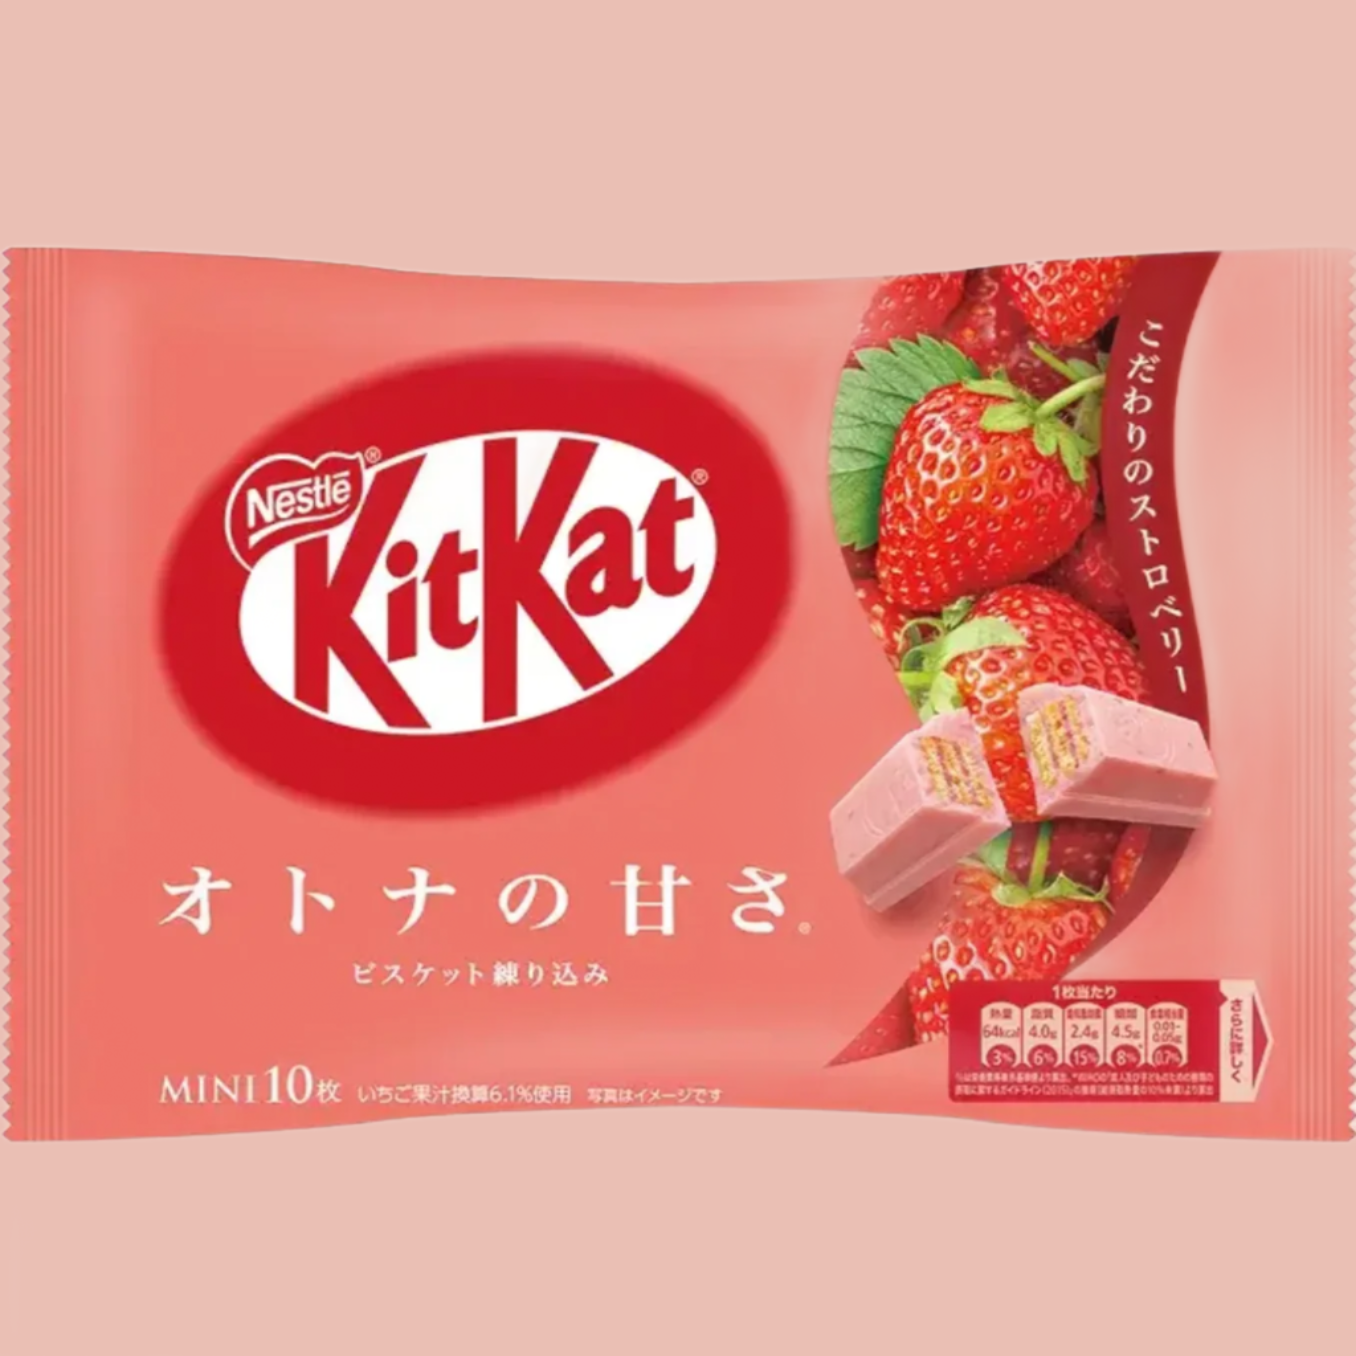 Kit Kat Strawberry Chocolate Wafer (Japan)